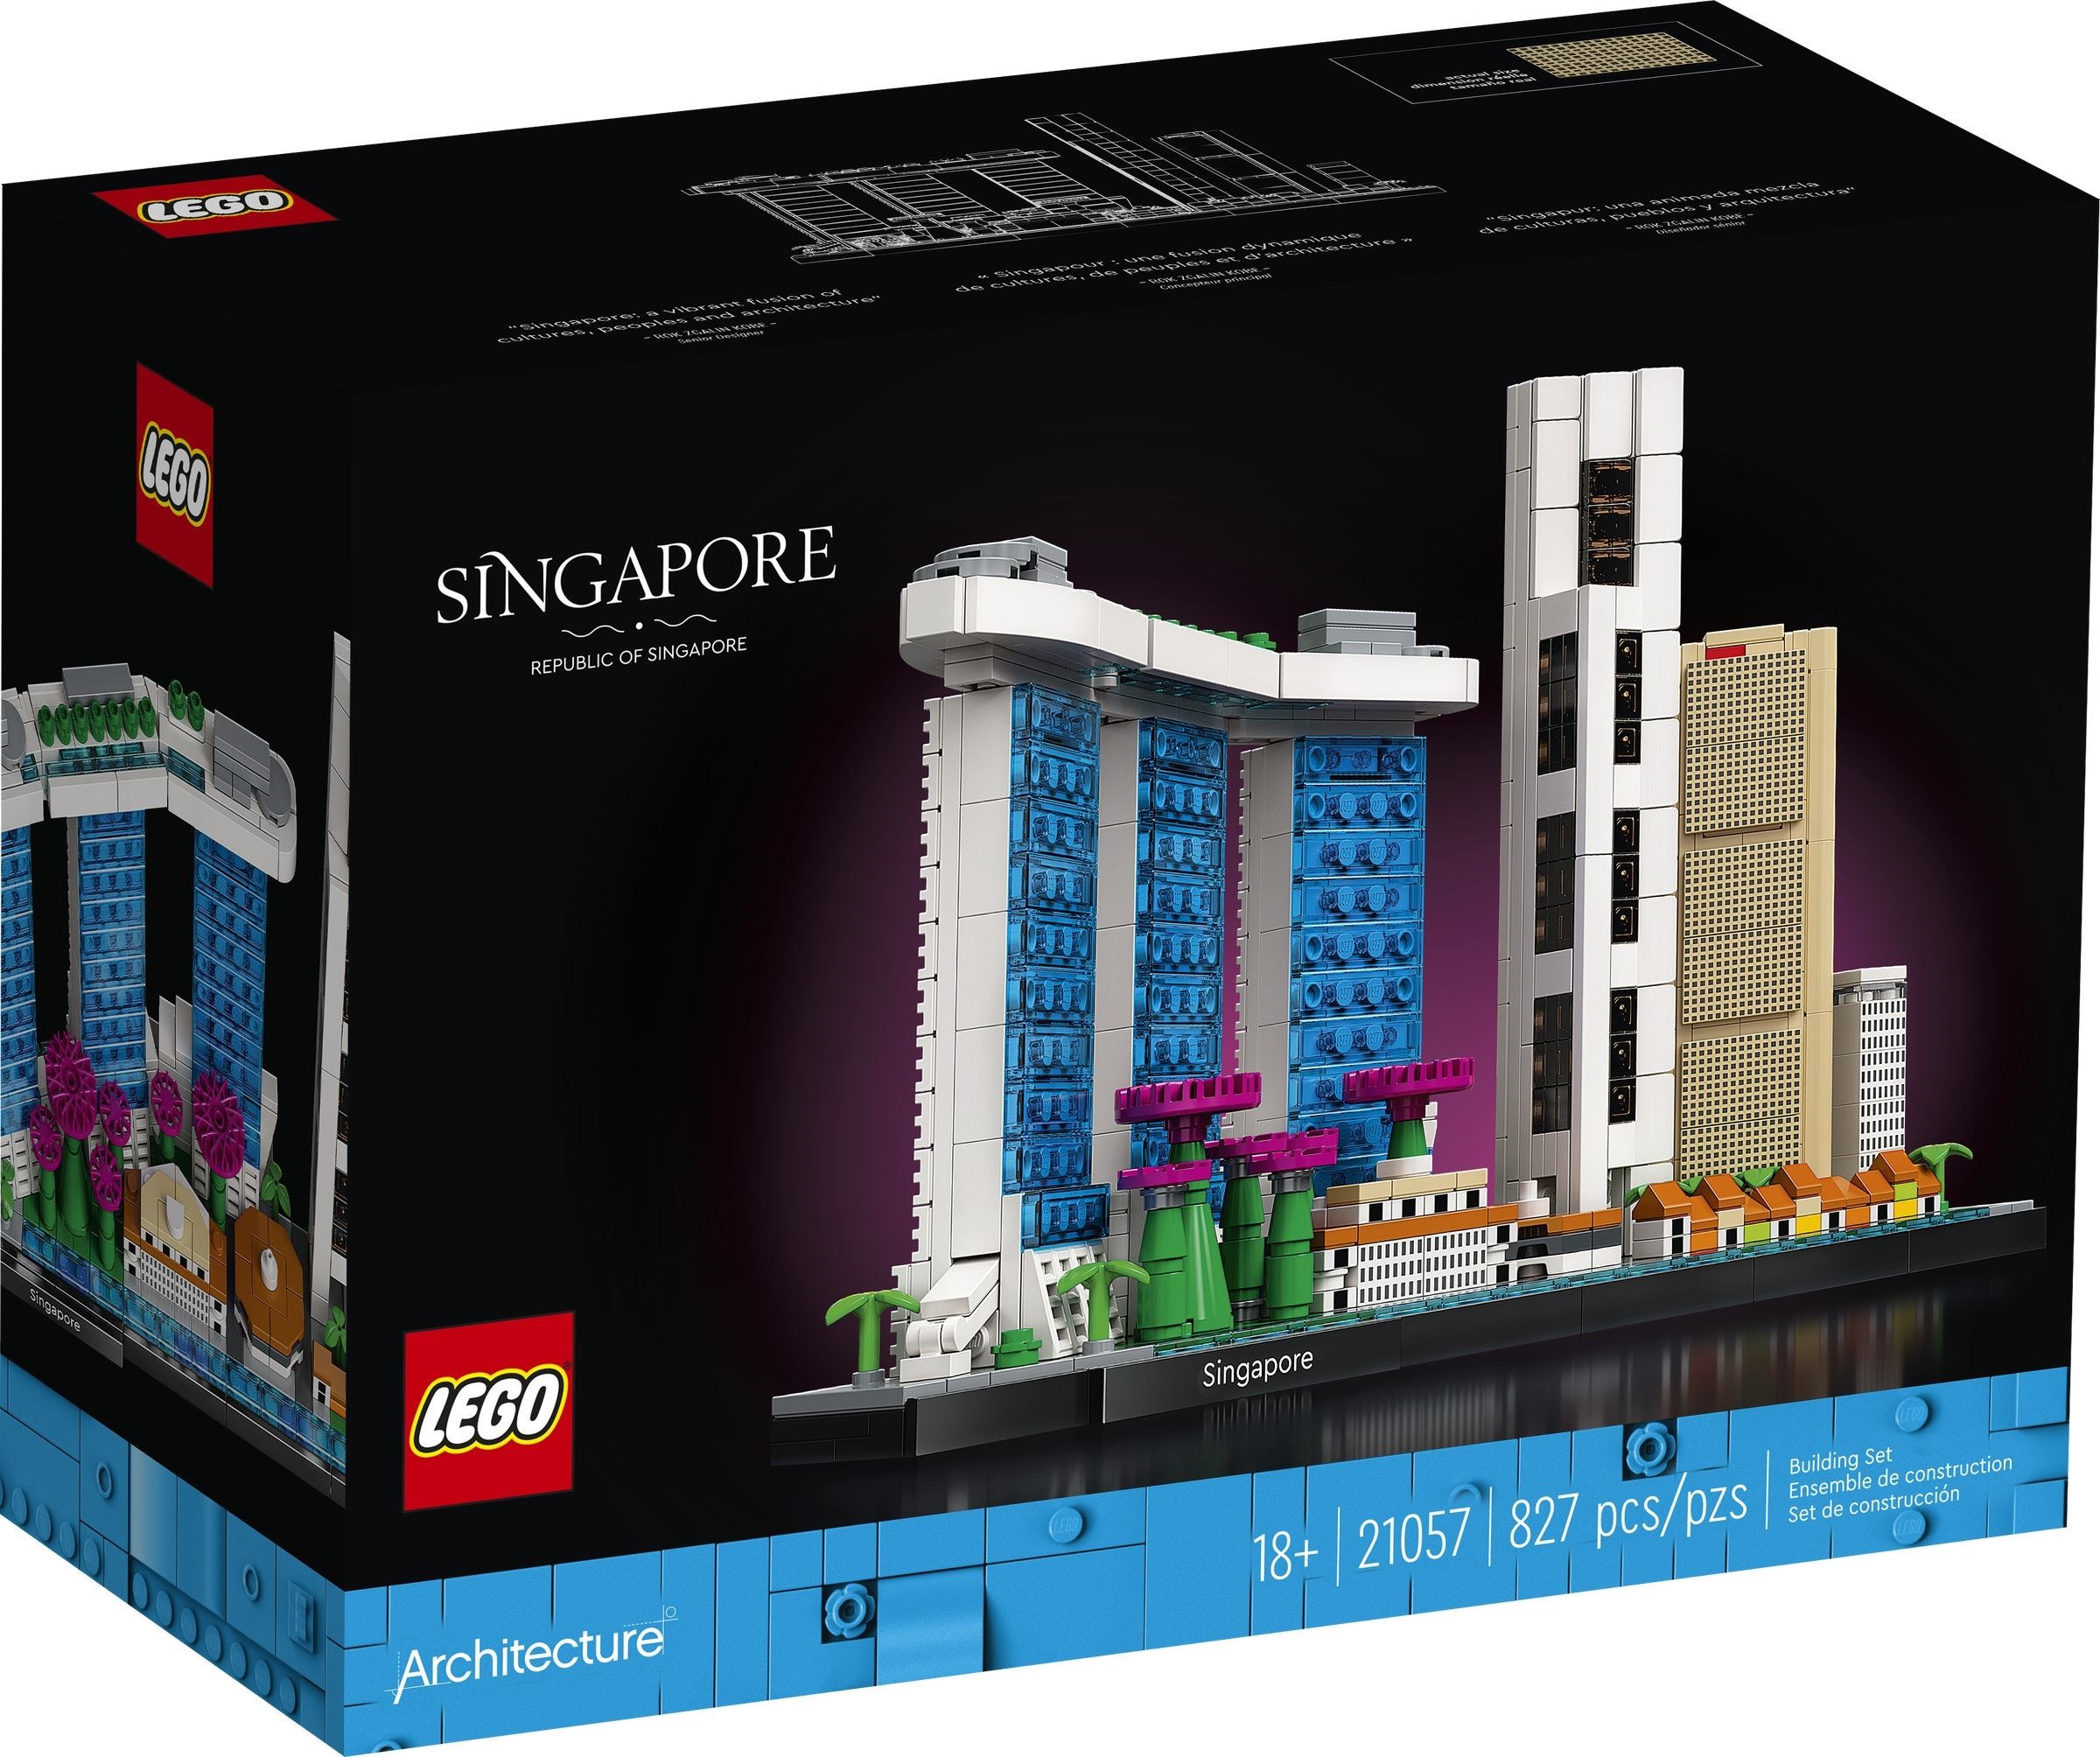 21057 Singapore, Brickipedia